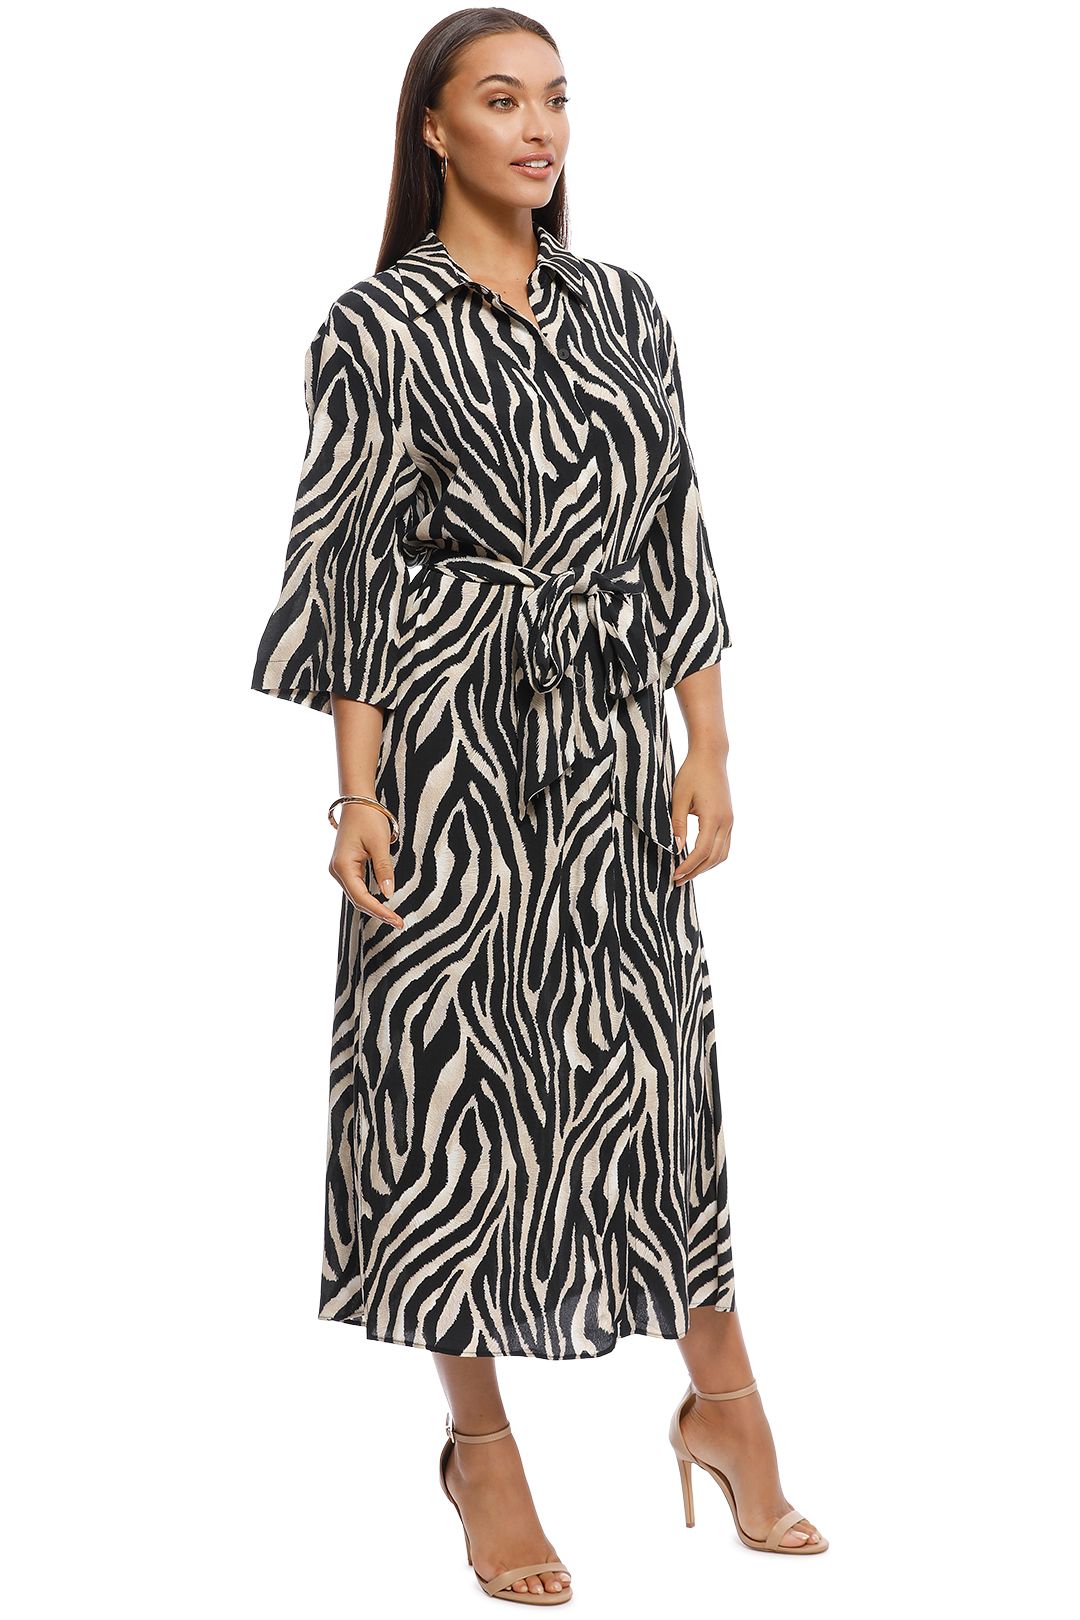 MNG - Zebra Animal Print Shirt Dress - Side